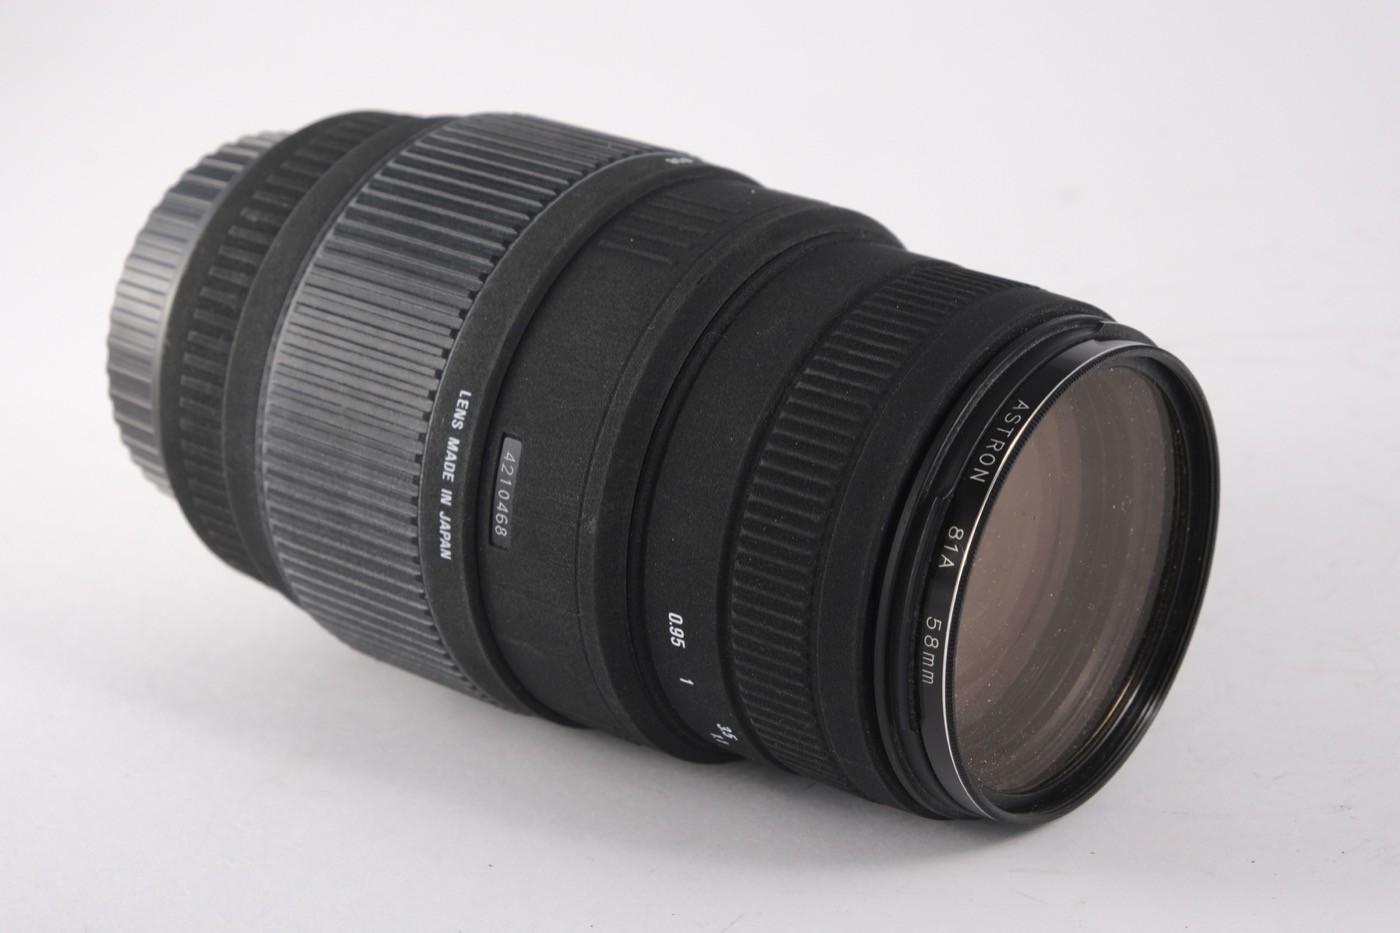 Sigma 70-300mm f/4-f/5.6 DG macro lens